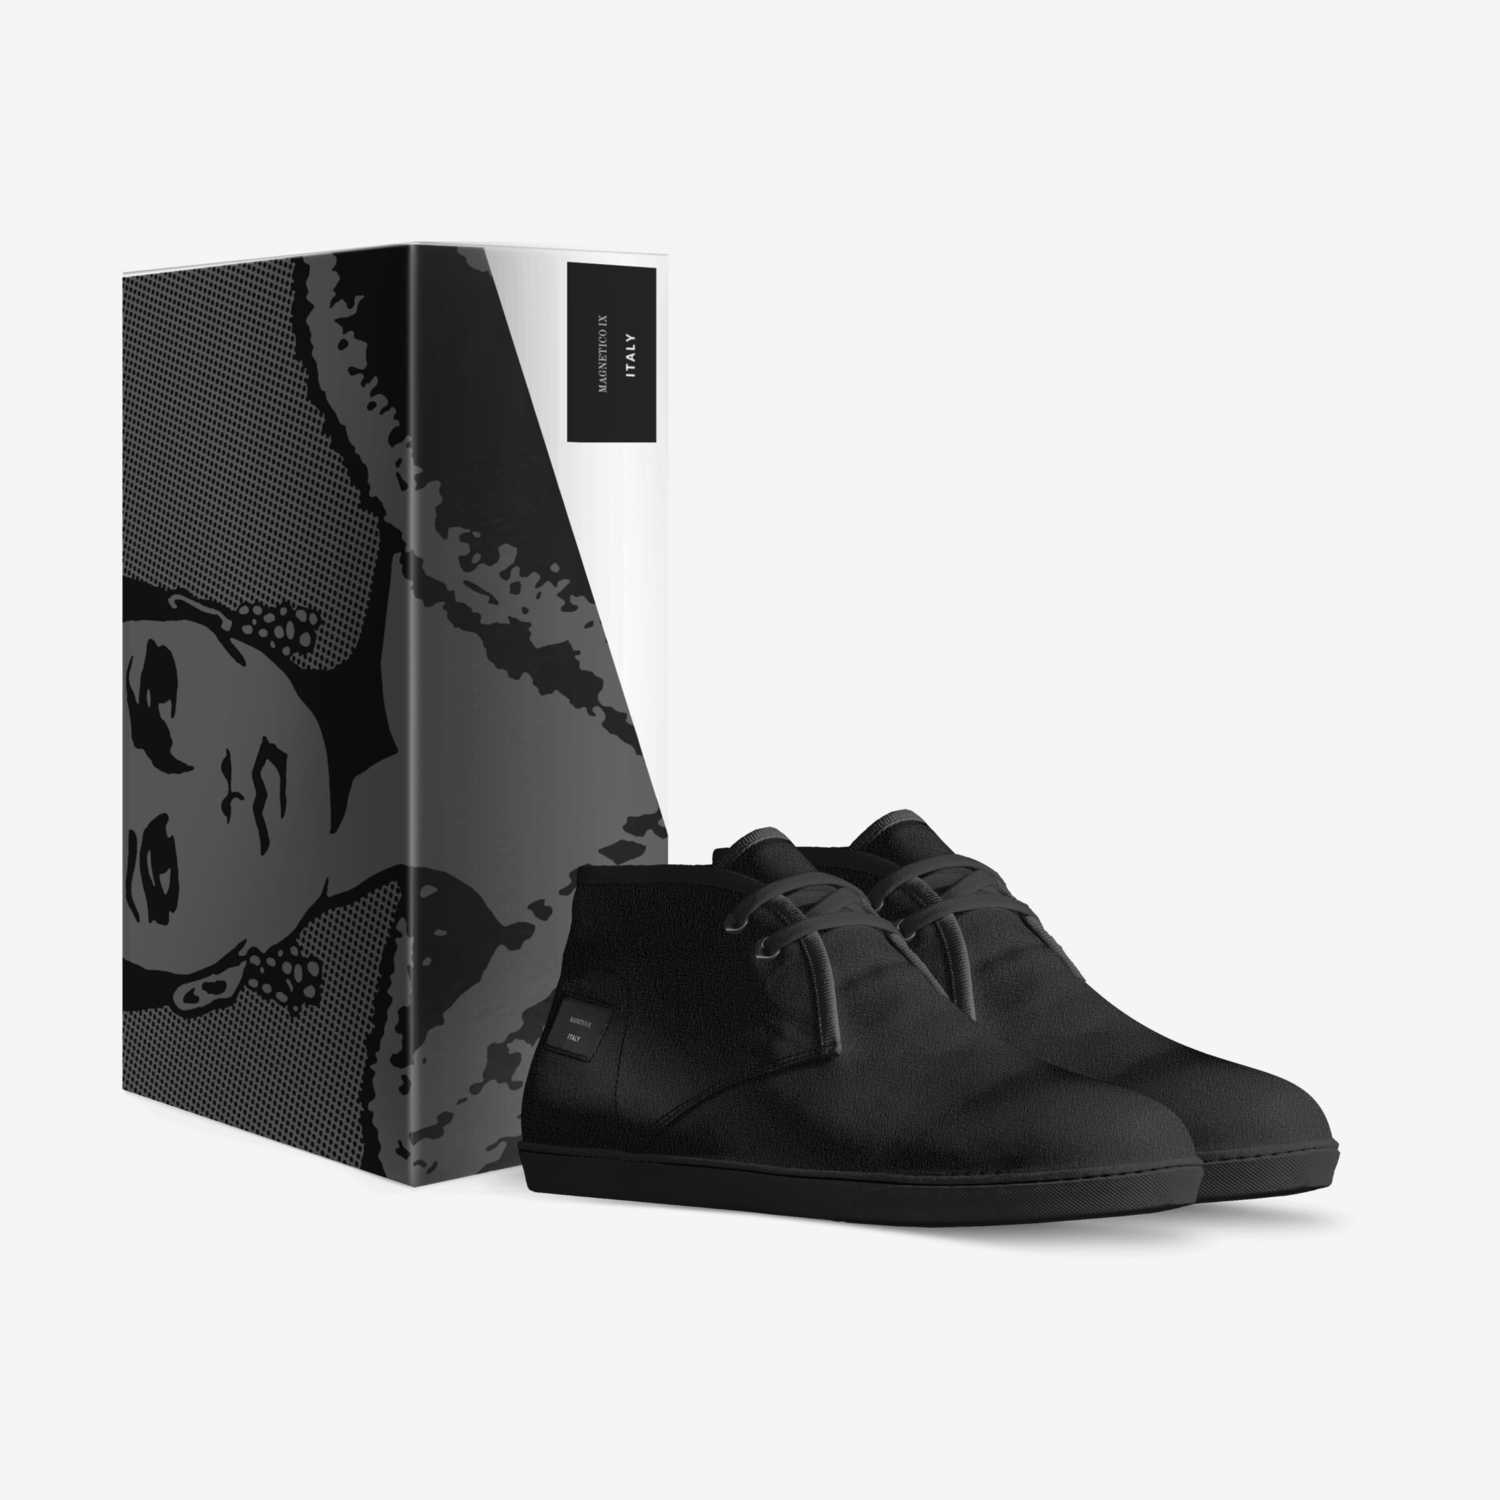 MAGNETICO IX EBONY custom made in Italy shoes by Jesús Sandoval | Box view